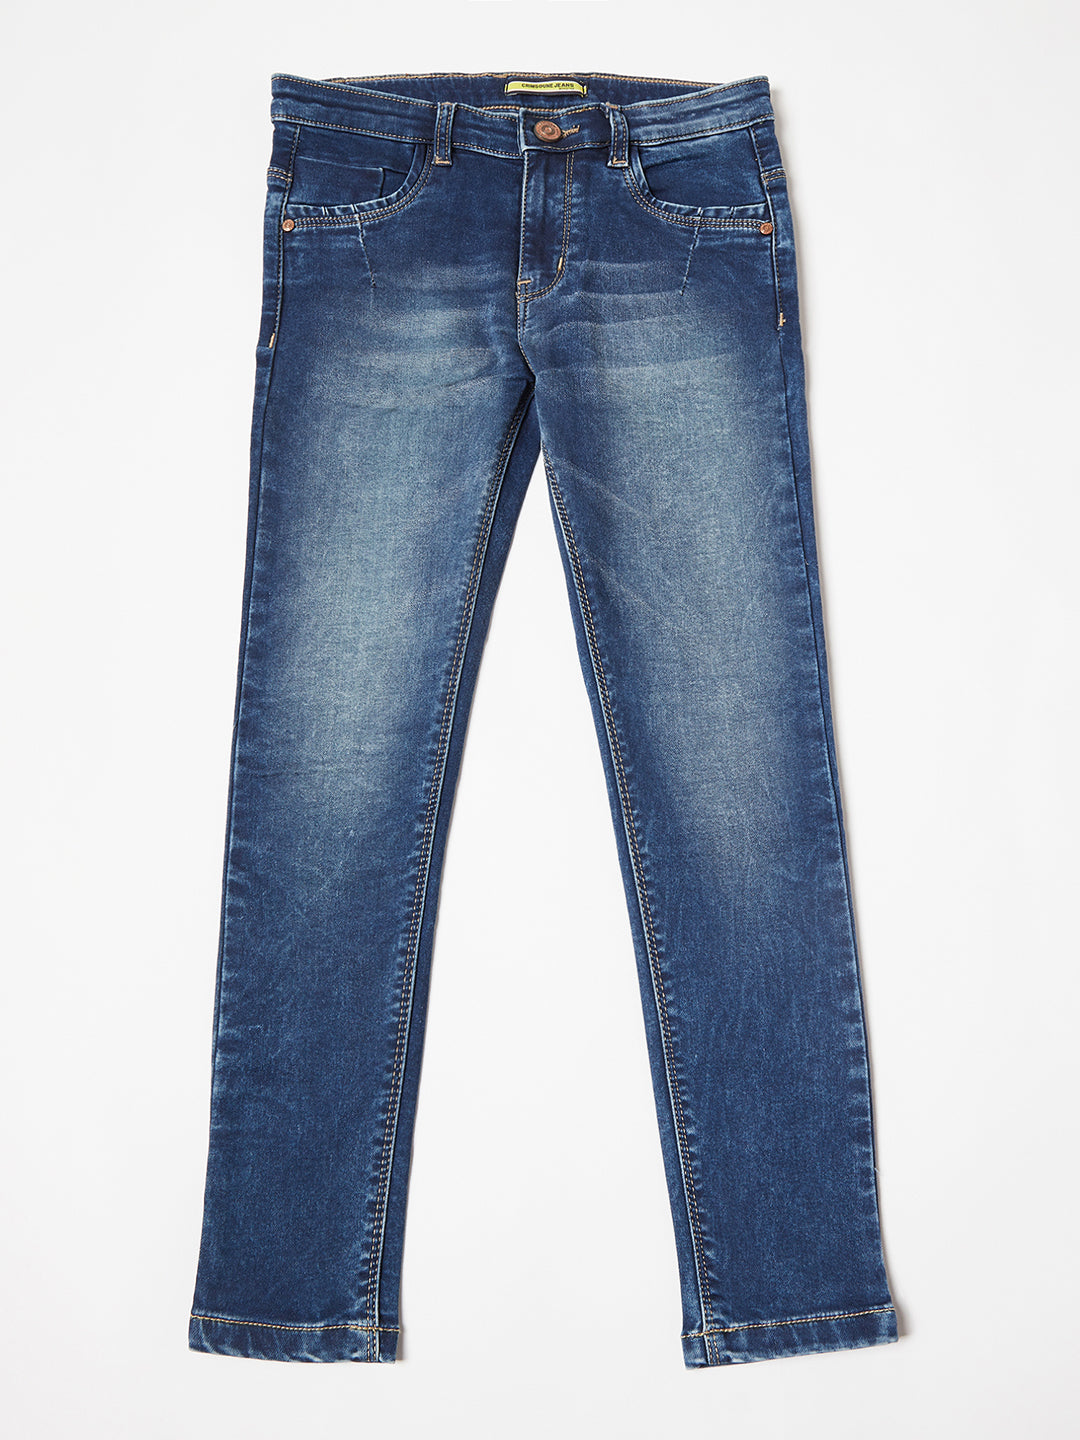 Blue Light Fade Jeans - Girls Jeans